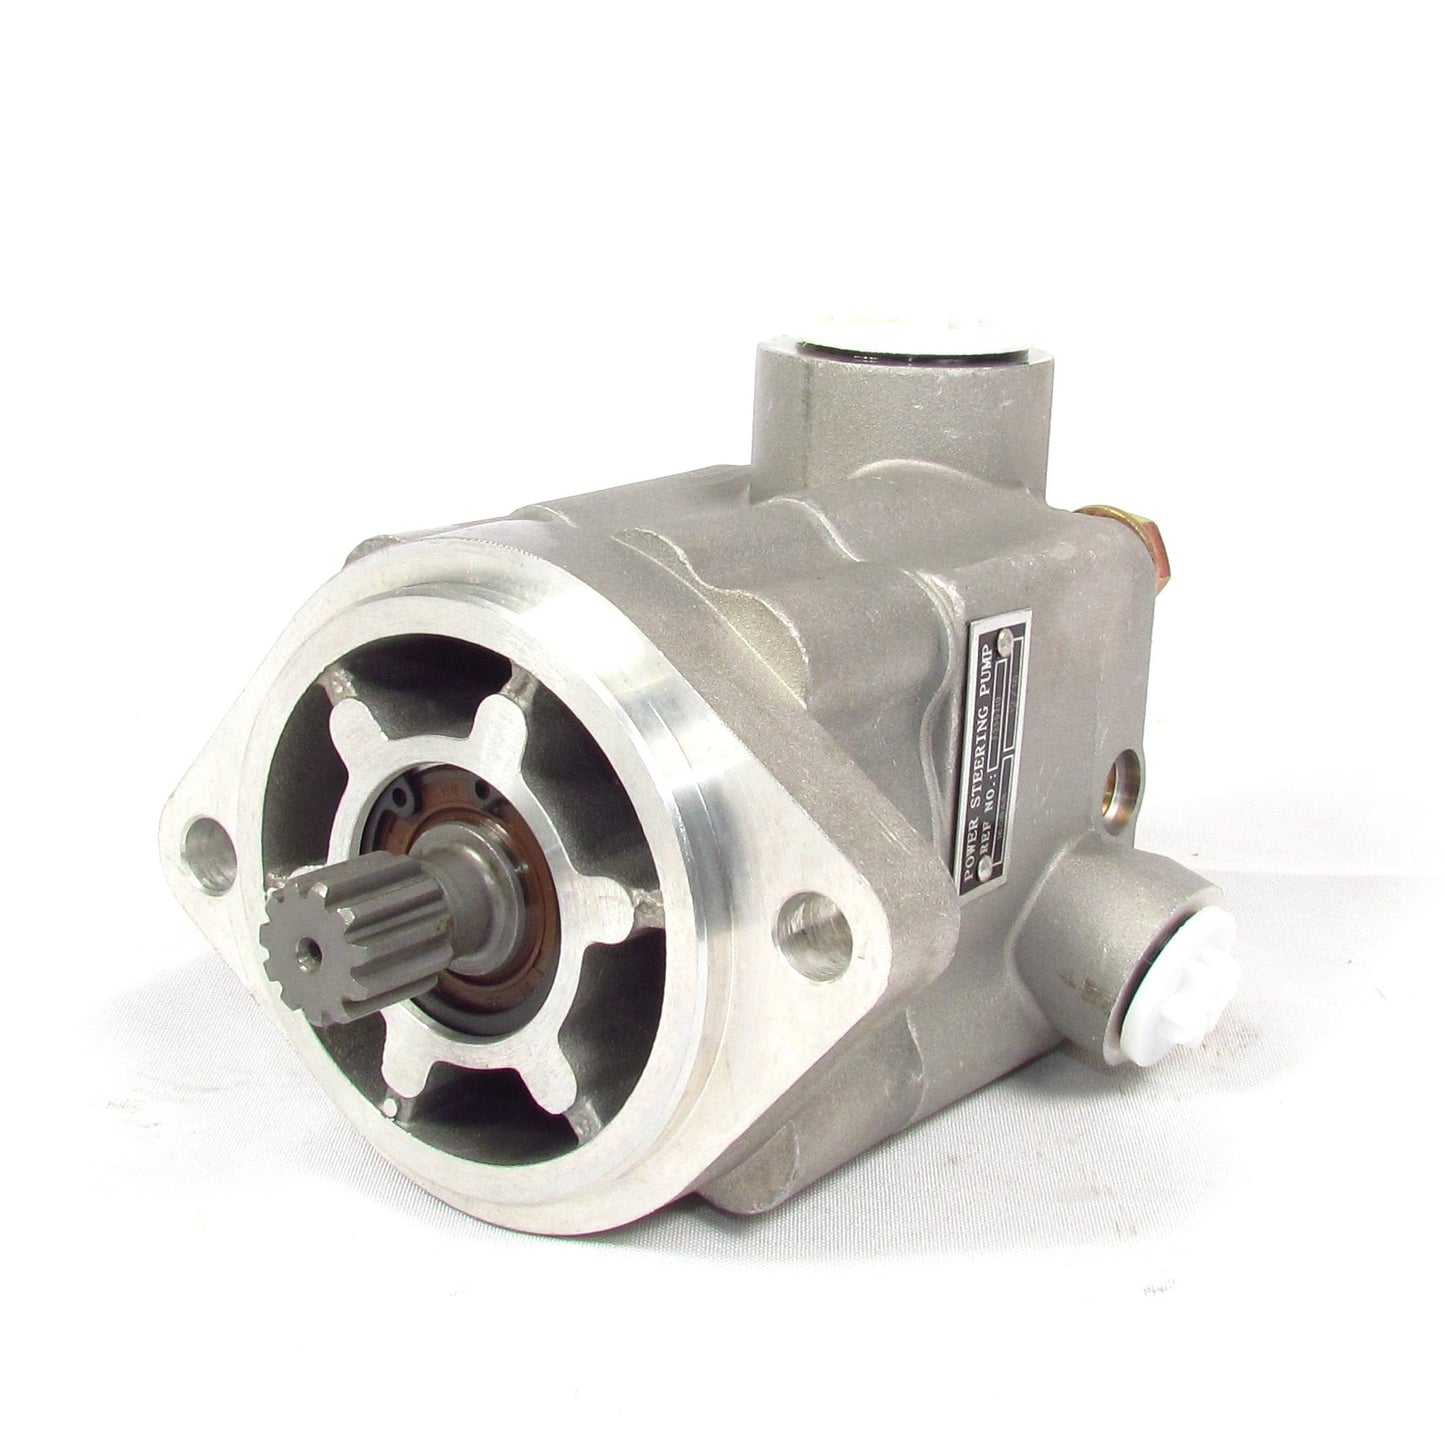 Fortpro Power Steering Pump Replacement for Cummins 542-0191-10 & International 1682-627-C91 | F255710